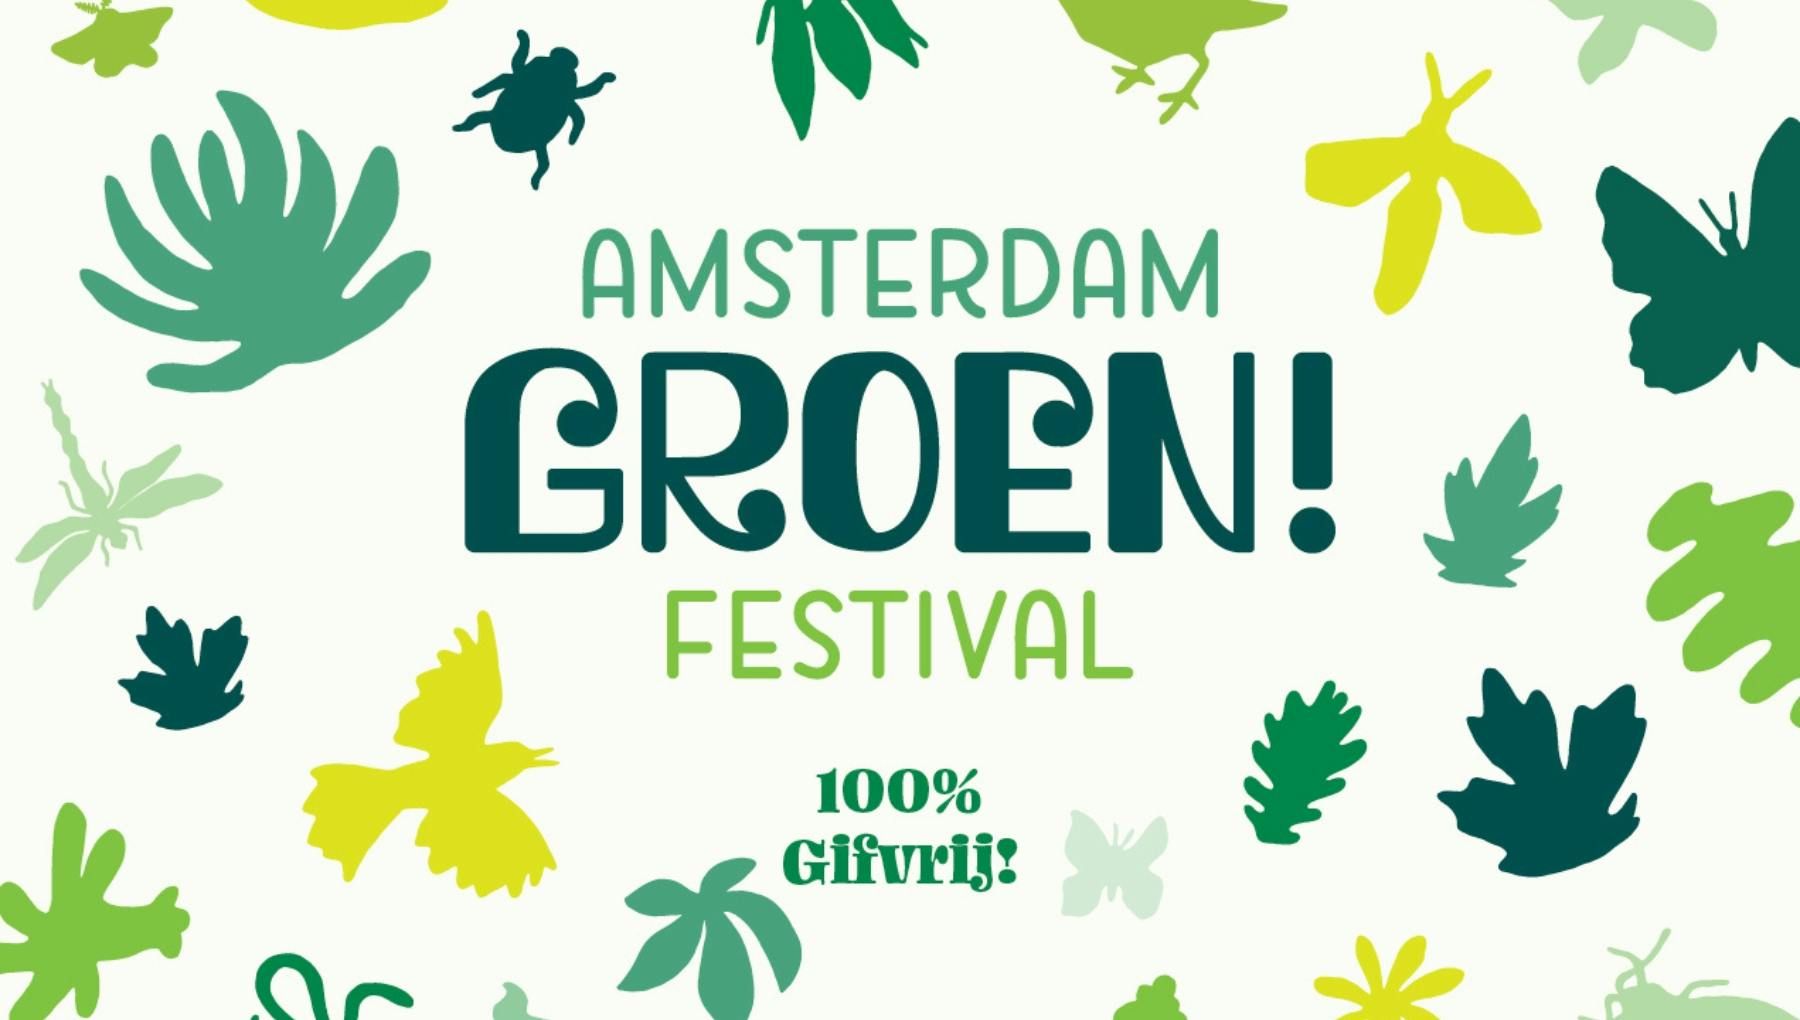 Amsterdam Groen! Festival (100% gifvrij!)